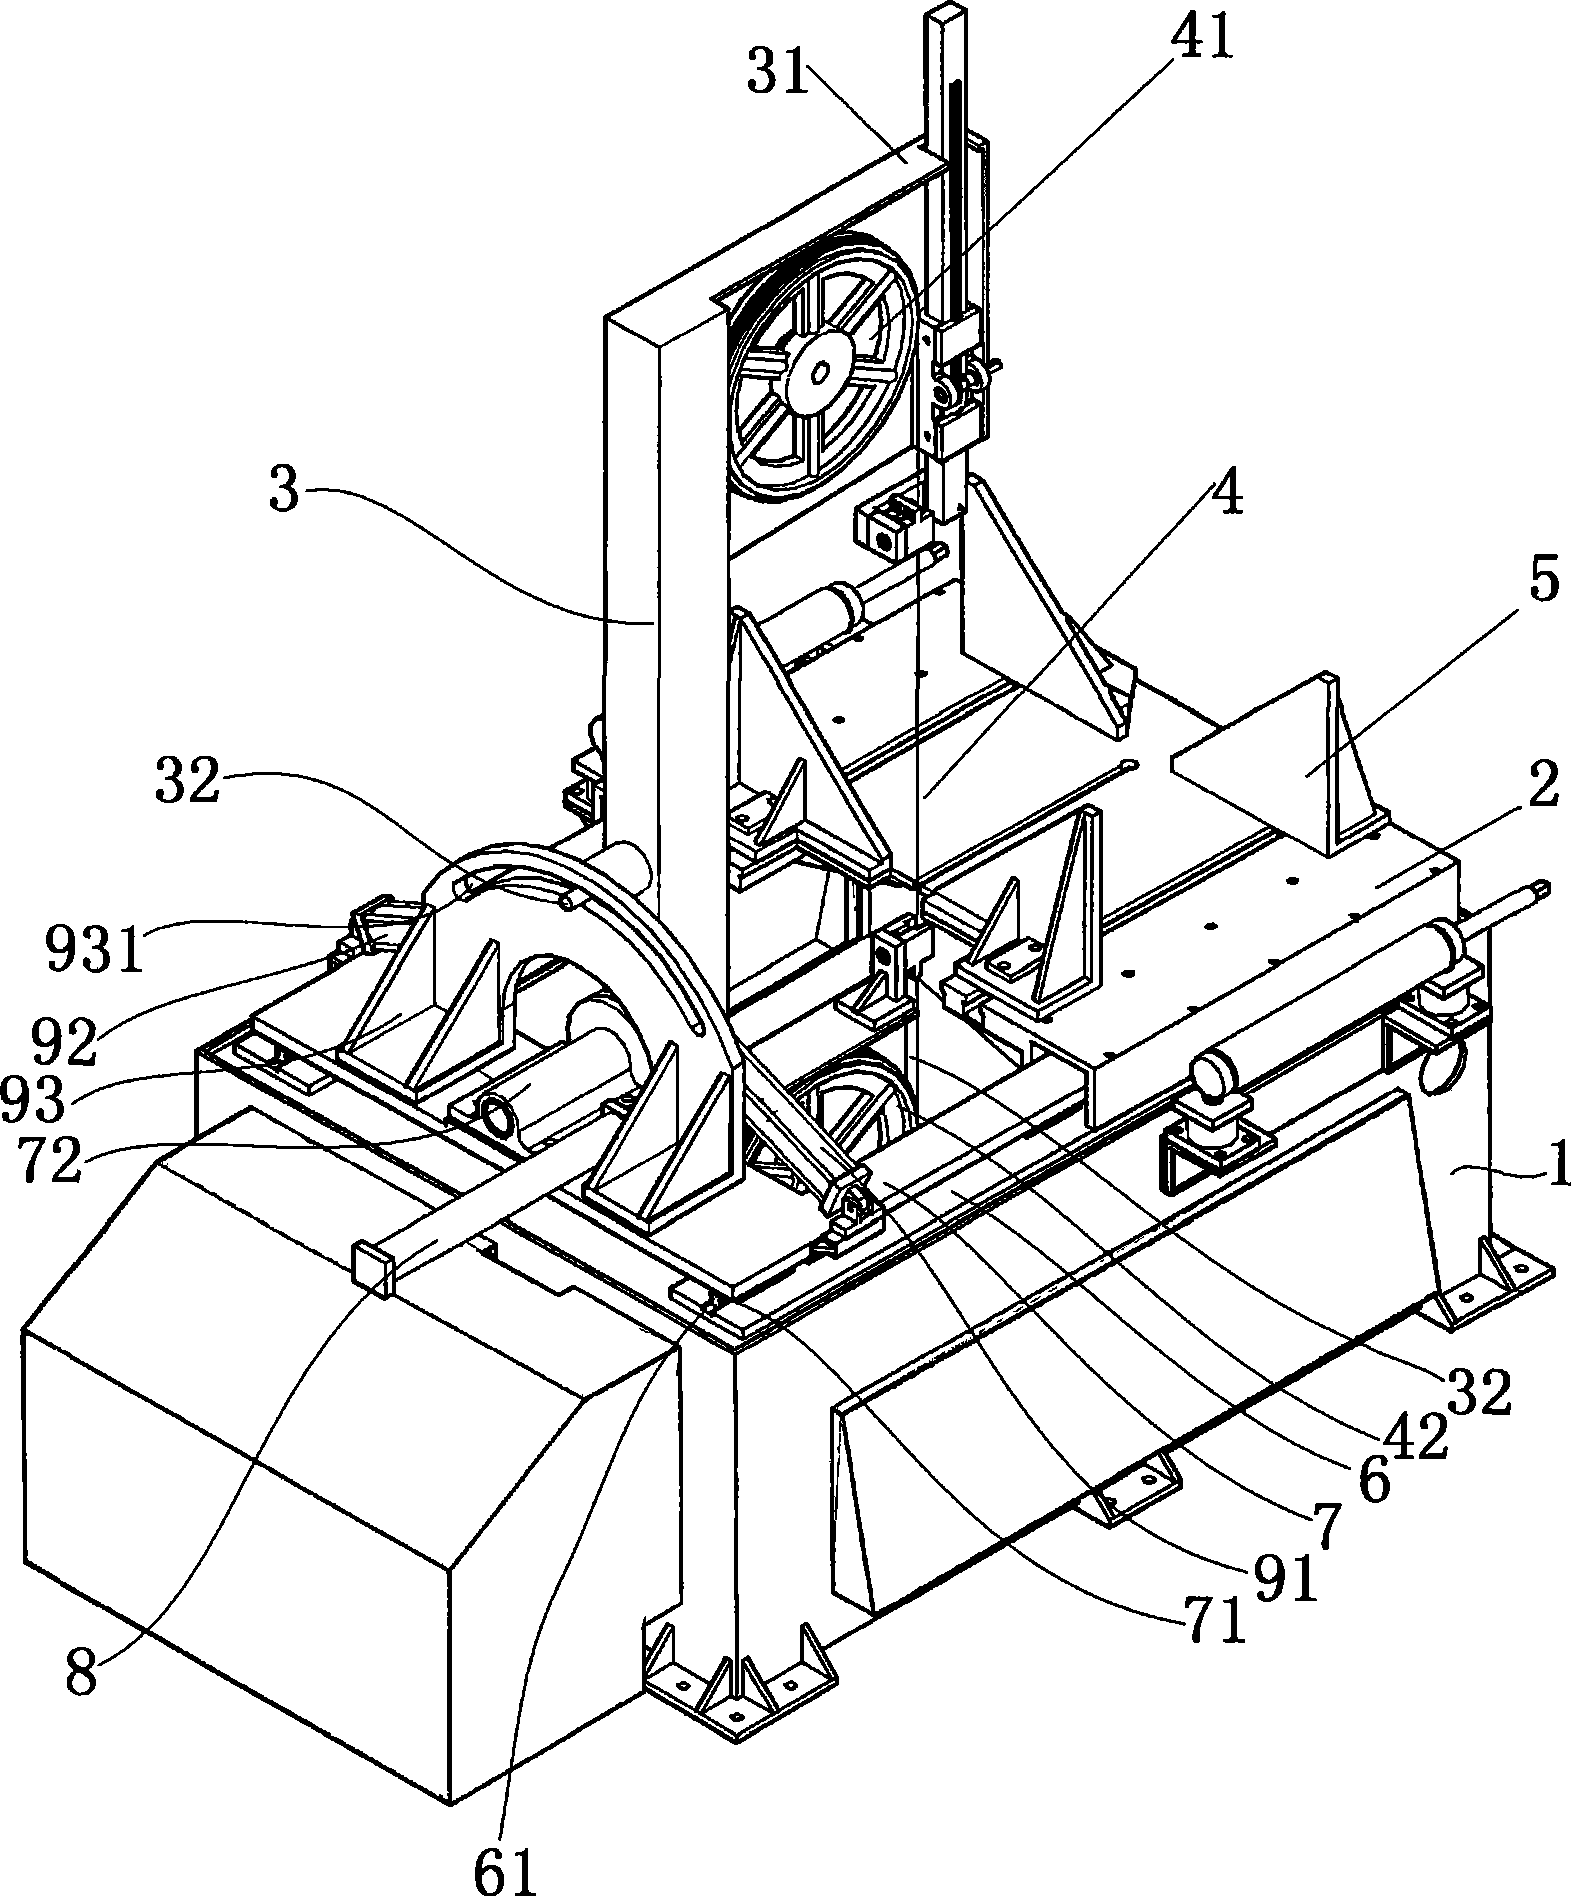 Band sawing machine with rotating angle